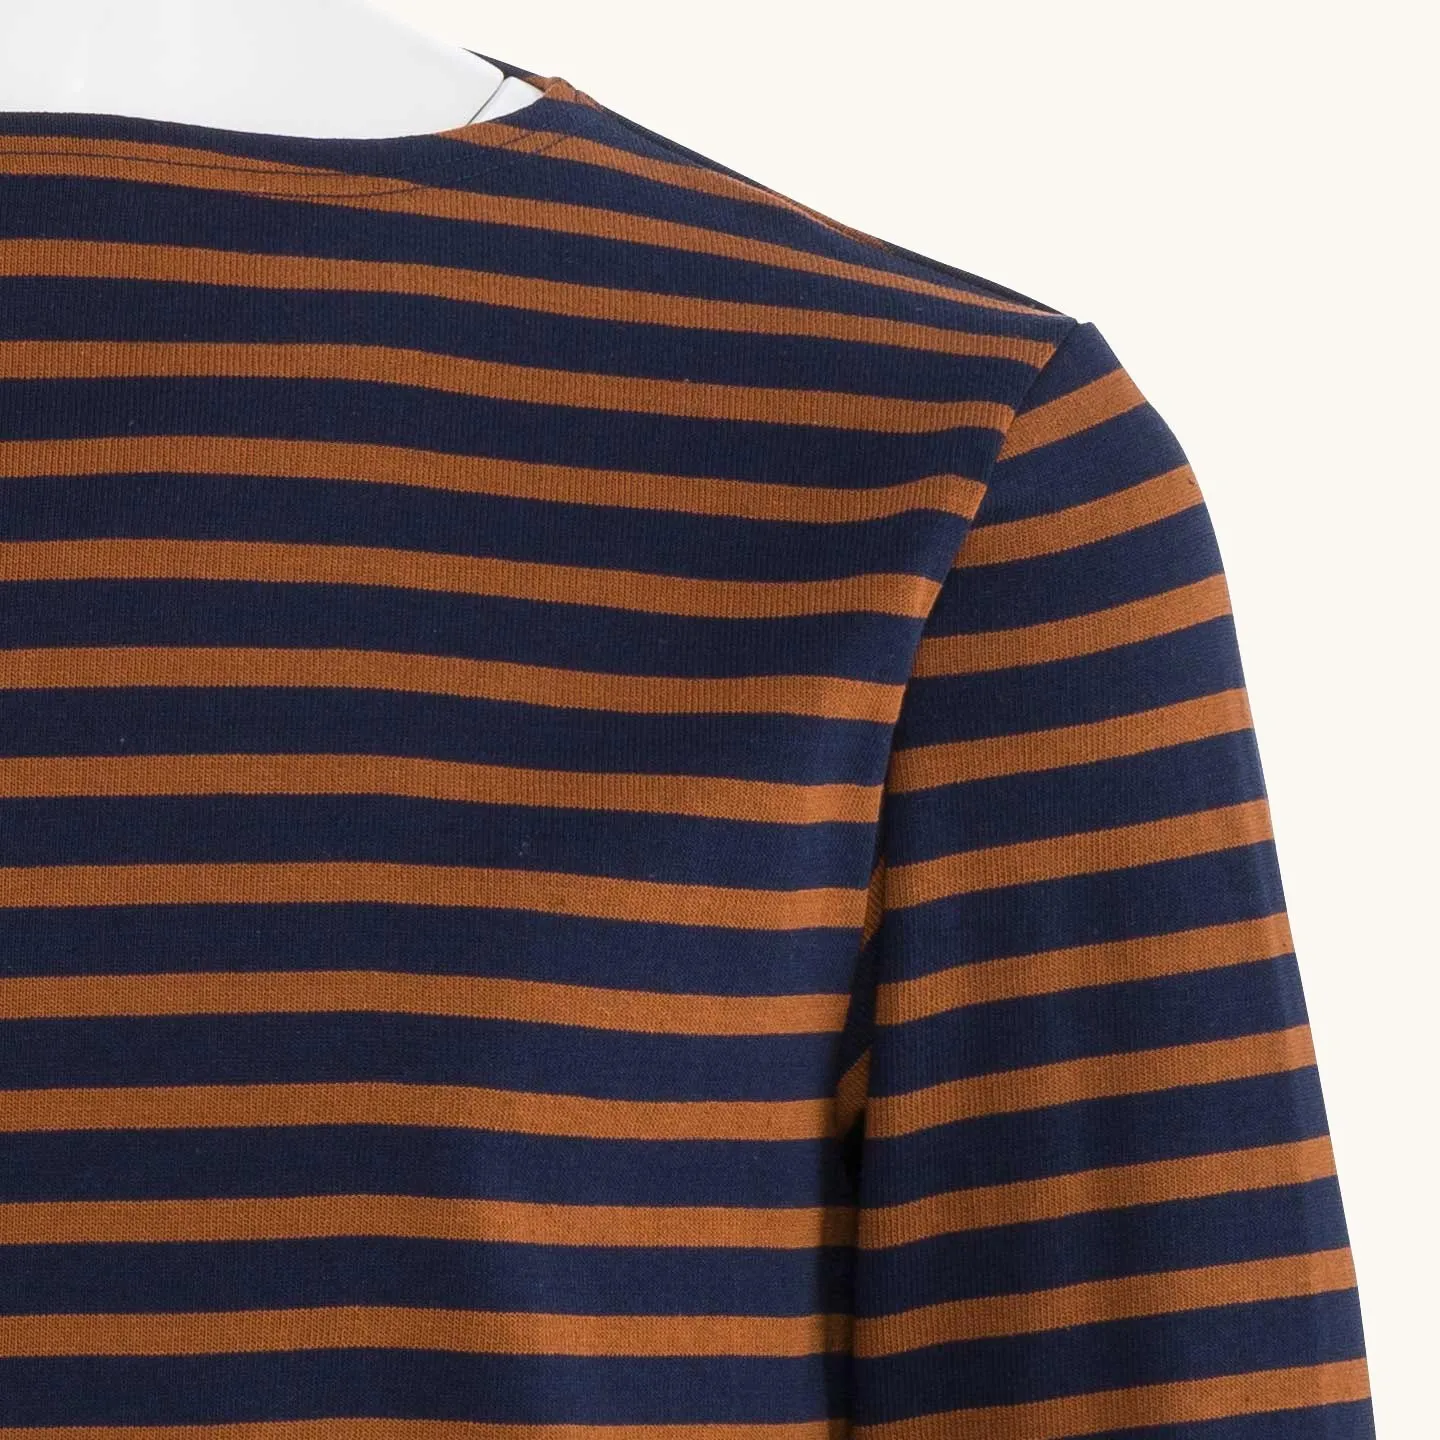 Striped shirt Navy / Hazelnut, unisex Orcival